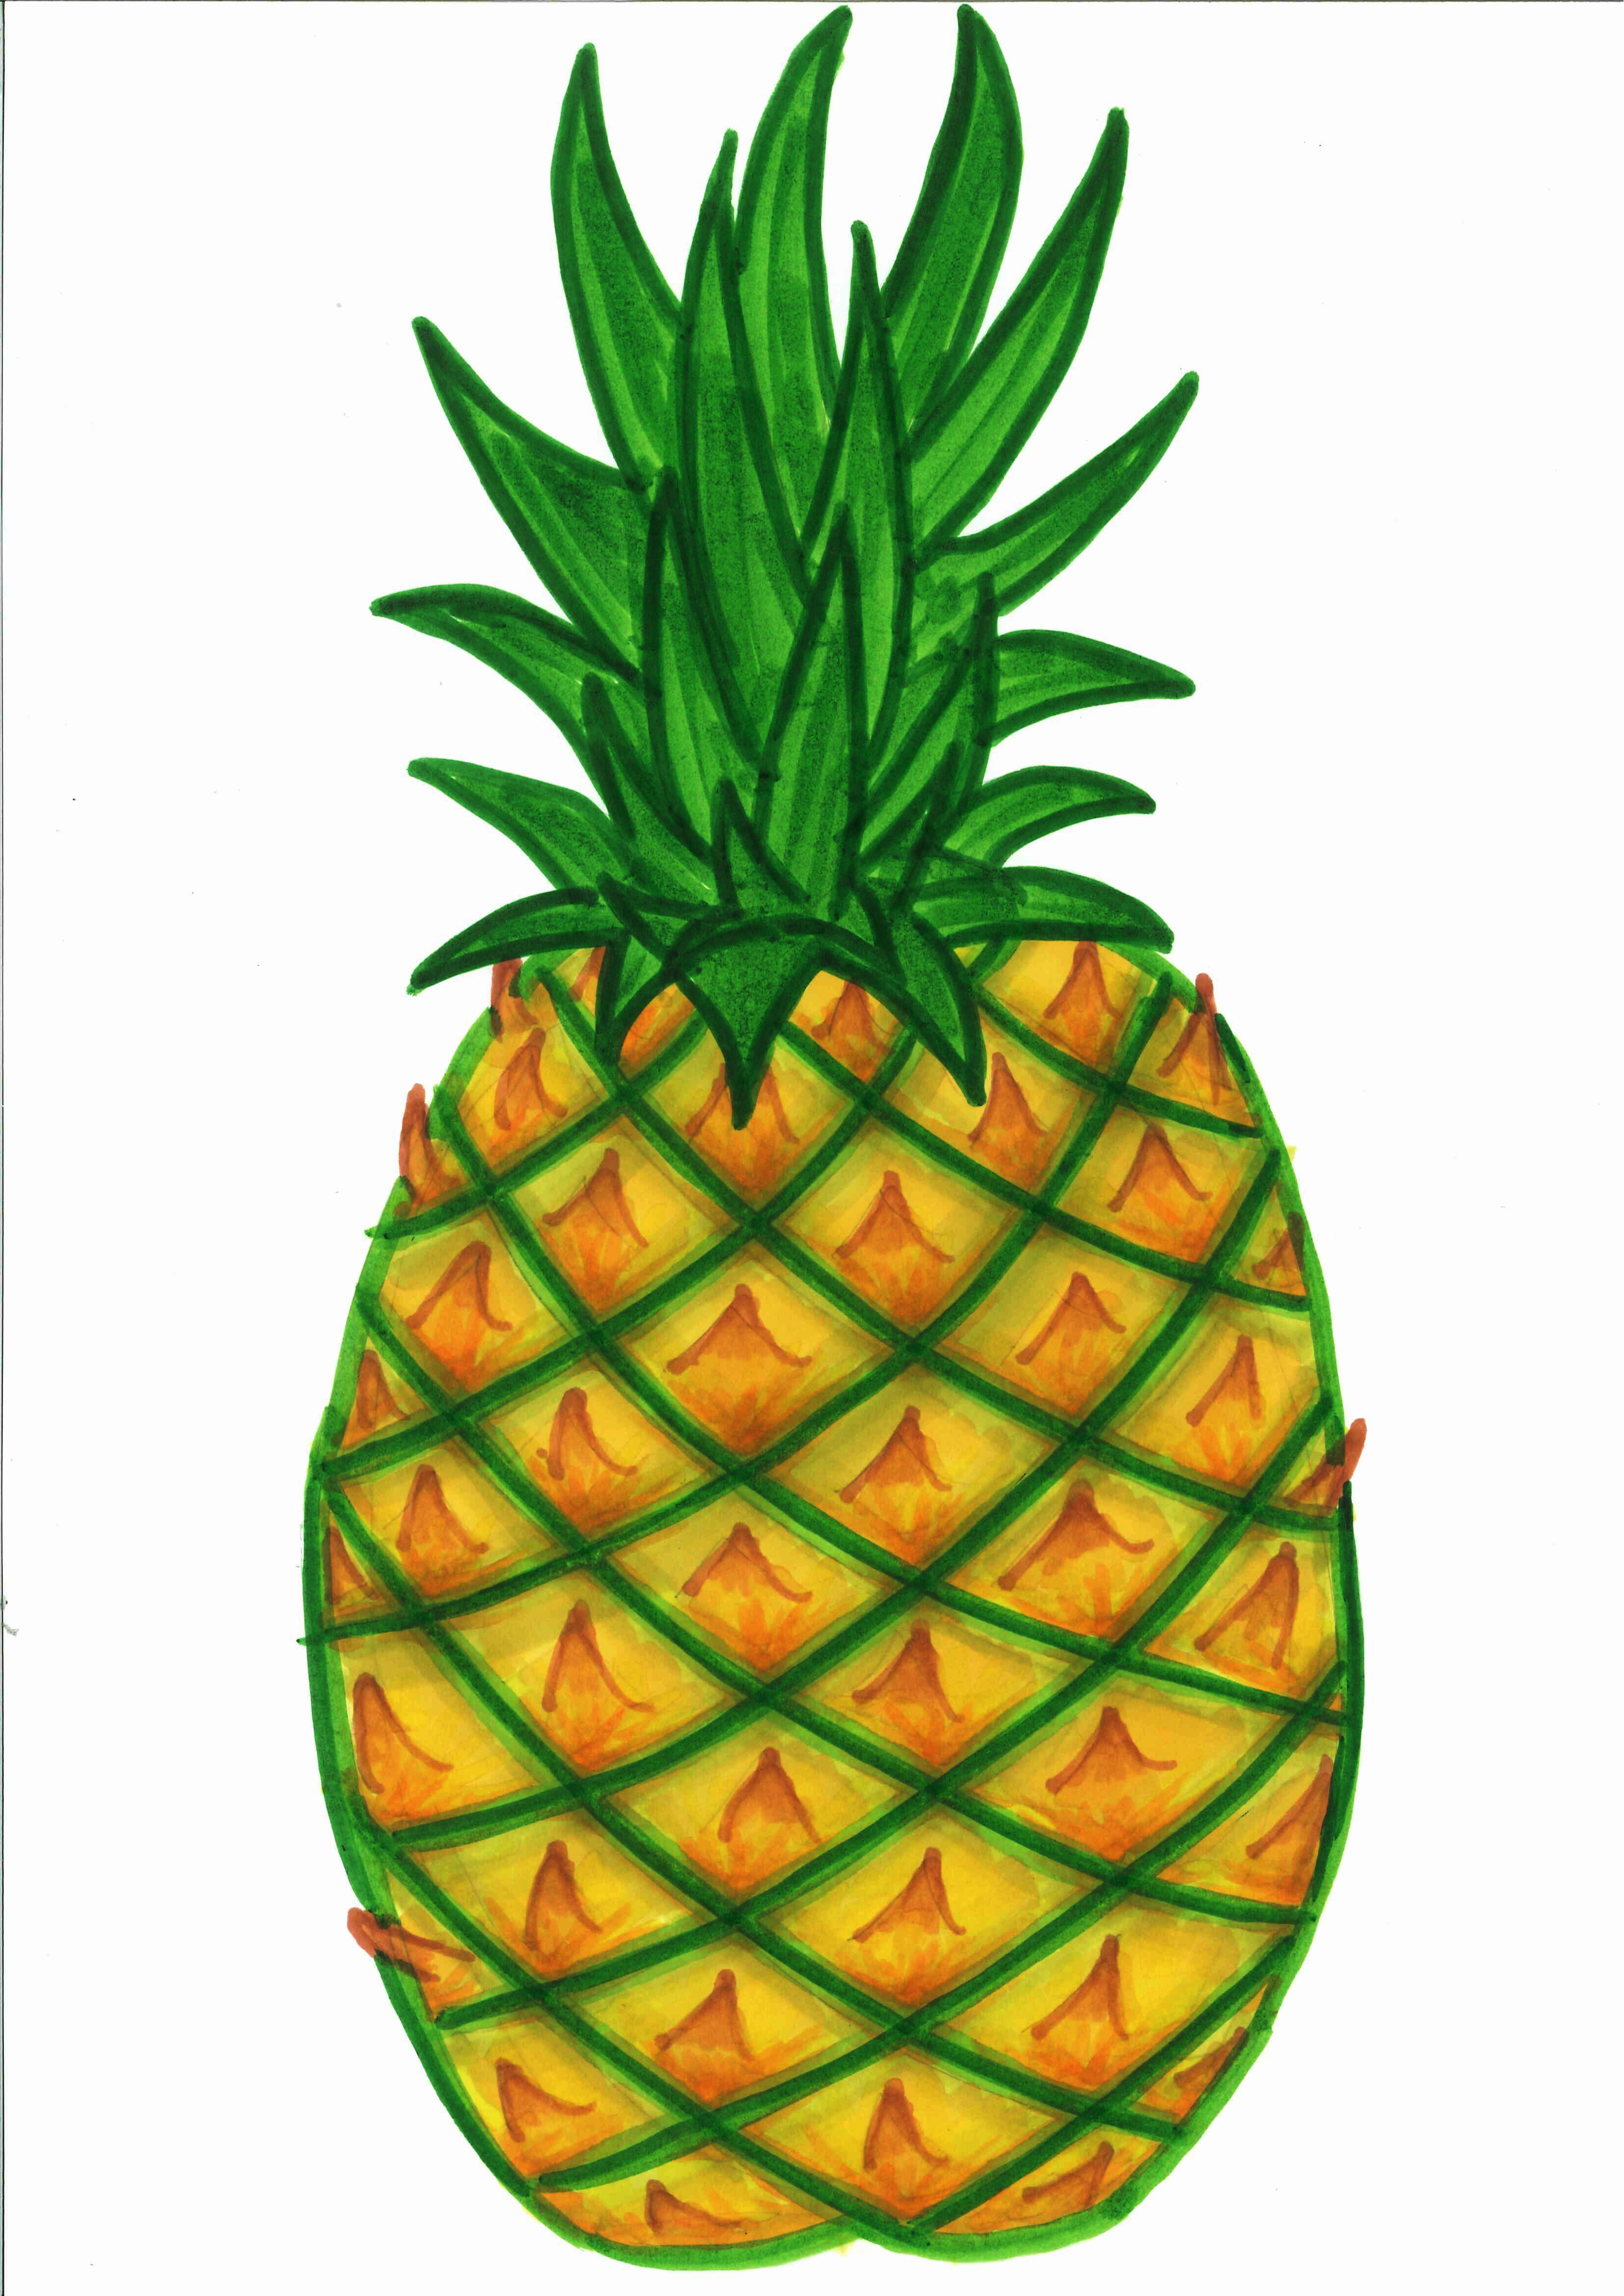 Free Pineapple Clip Art u0026